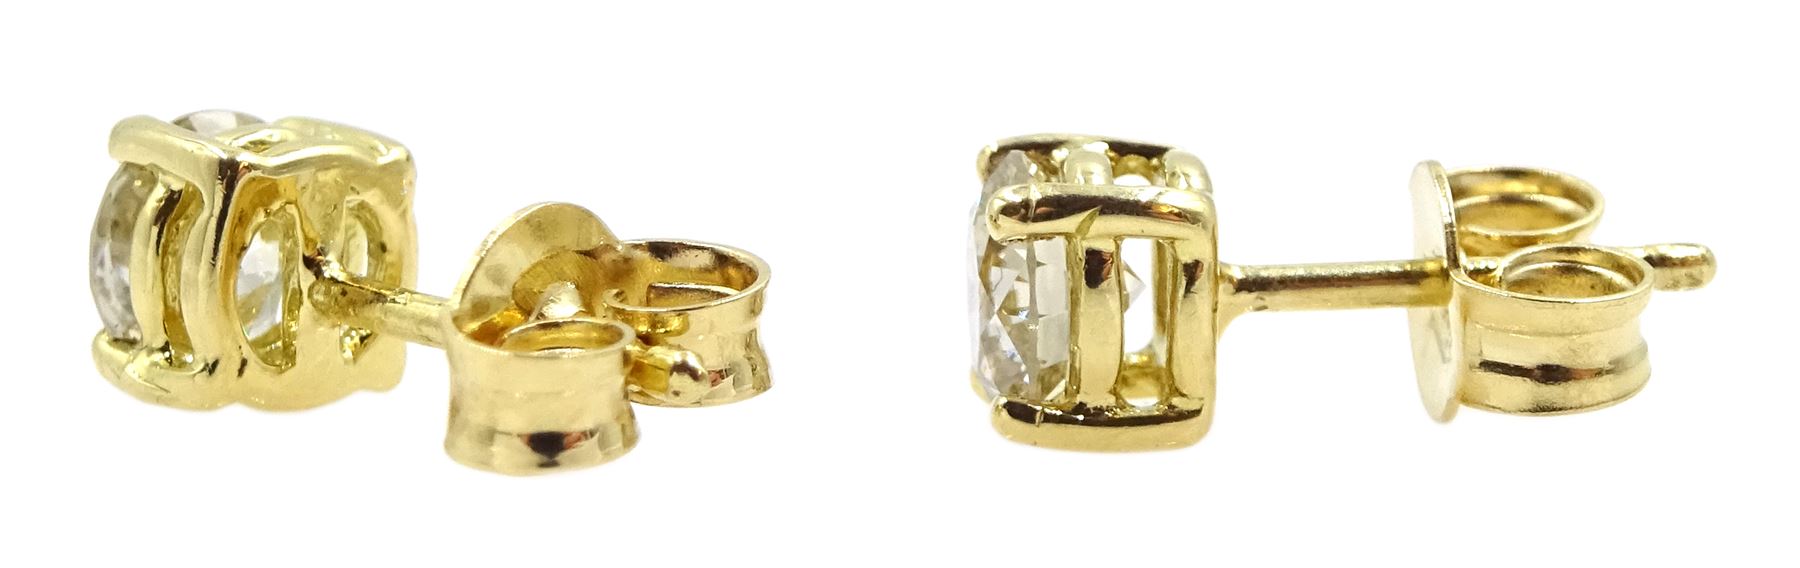 Pair of 18ct gold diamond stud earrings - Image 3 of 6